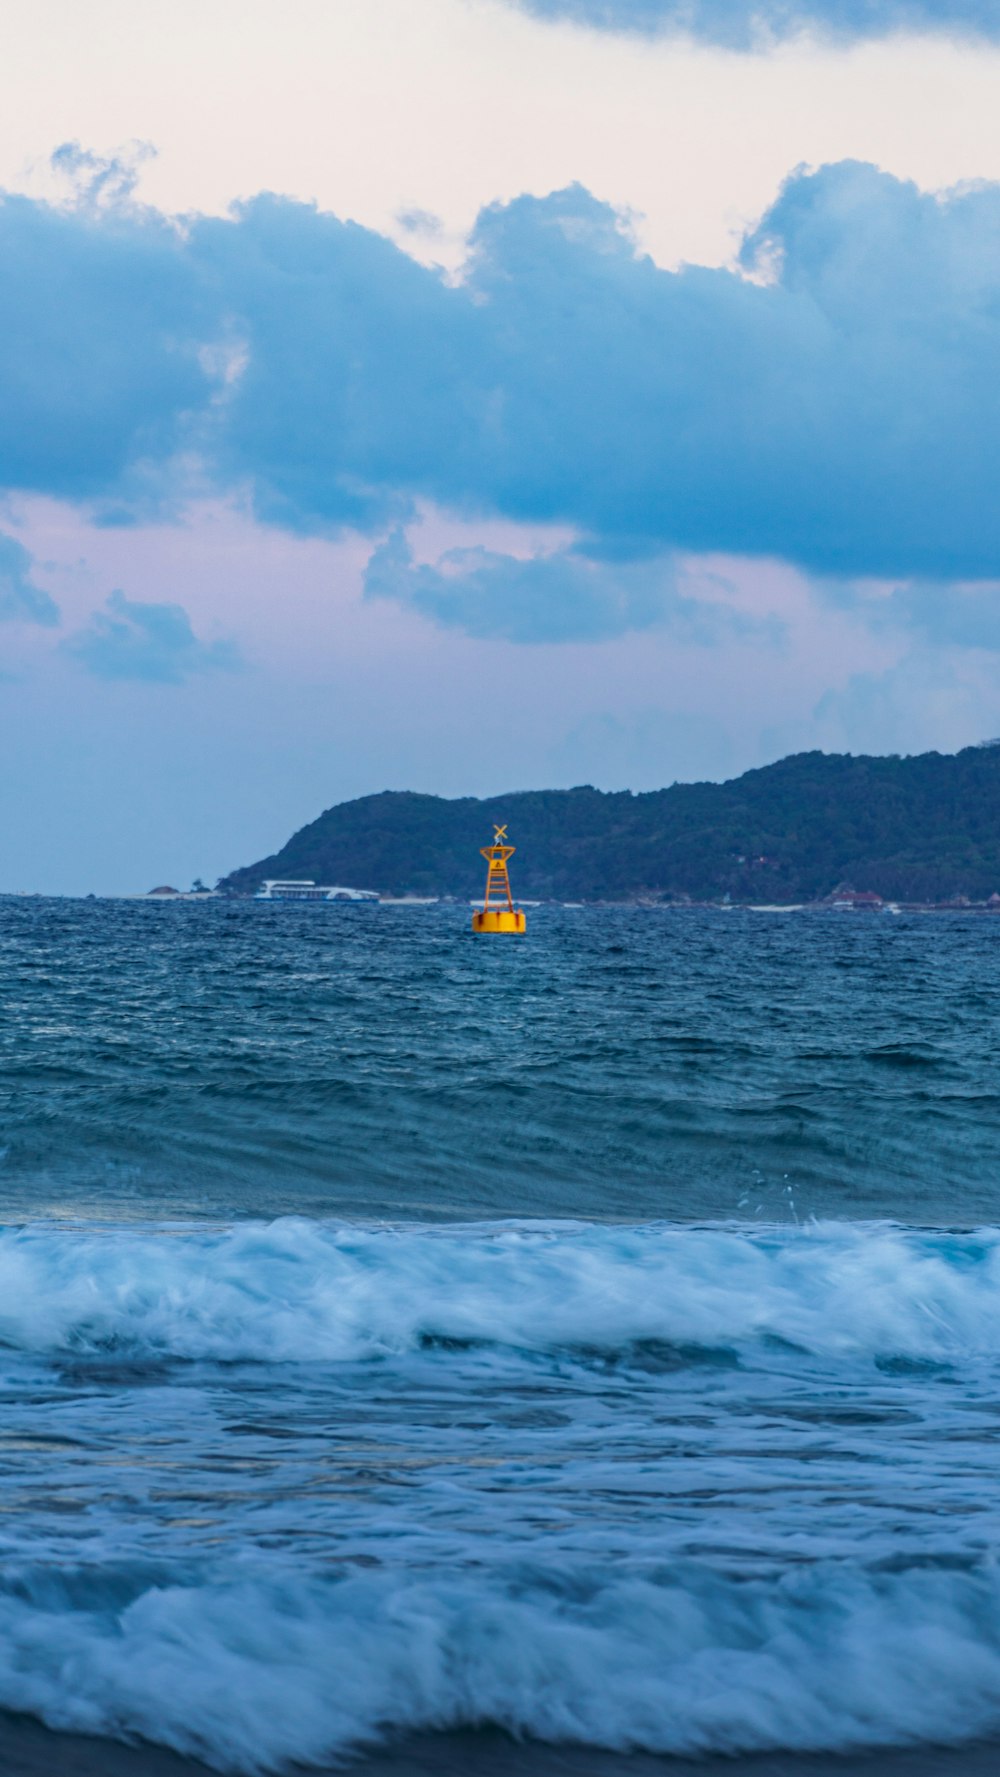 person in yellow shirt riding yellow kayak on sea during daytime